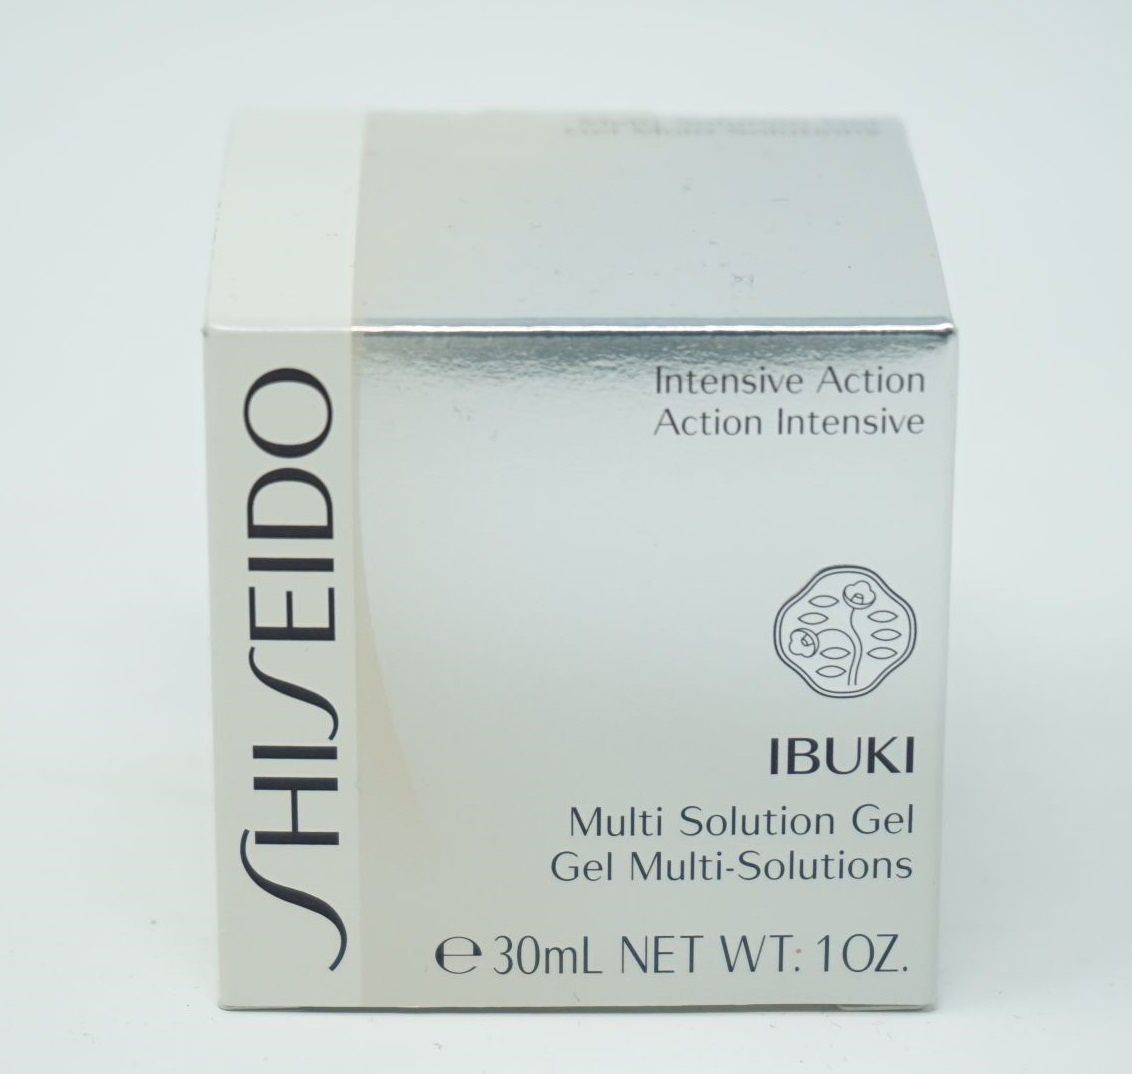 Shiseido Ibuki Multi Solution Gel 30ml Intensive Action